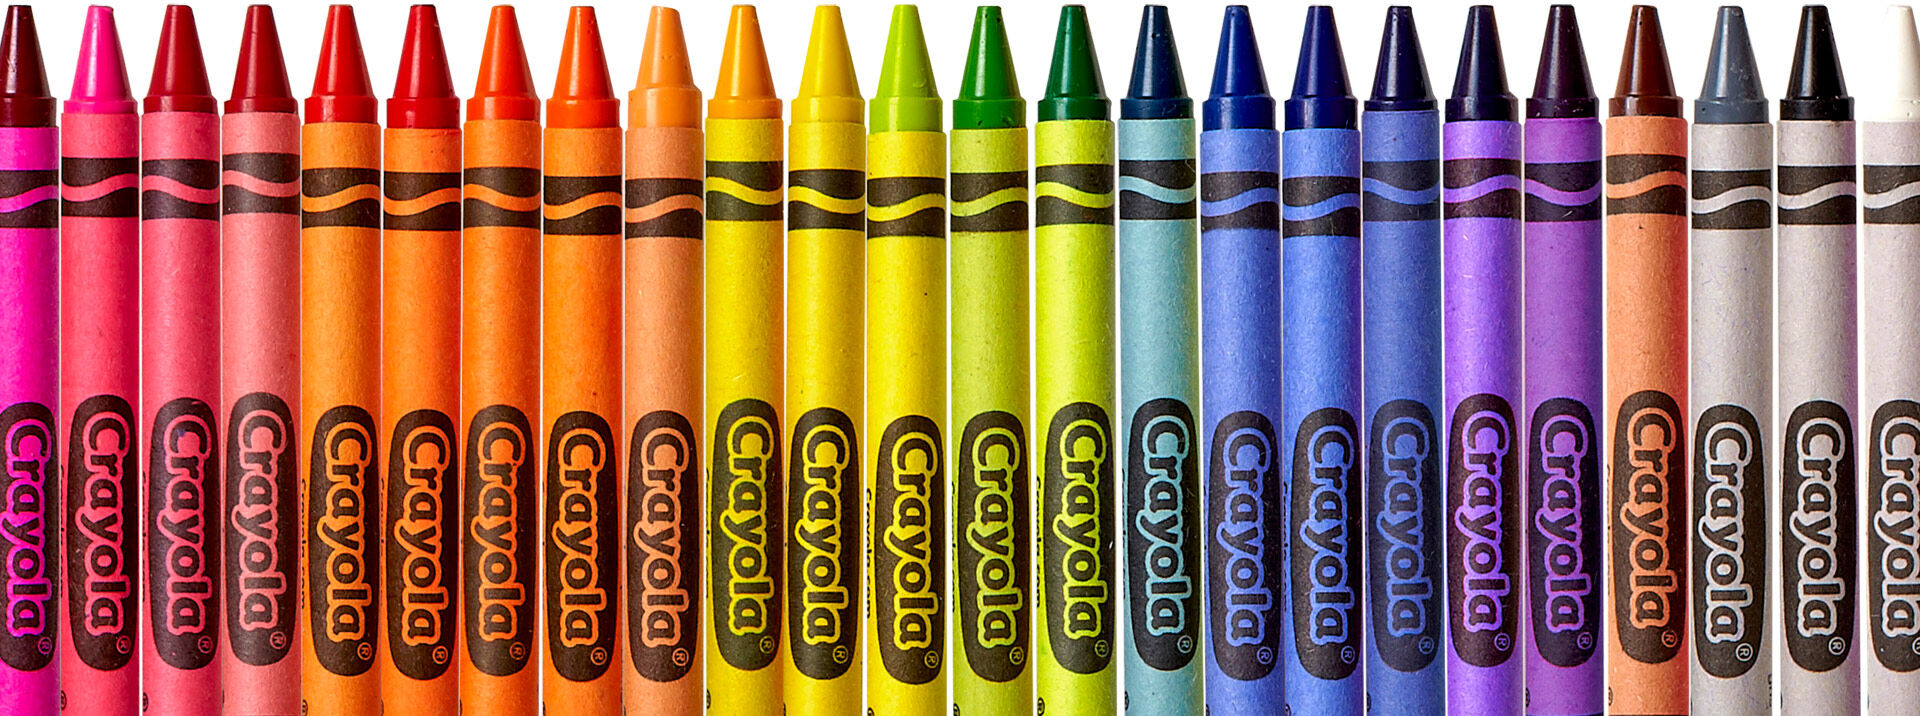 Crayola Crayons Shop Crayon Packs Boxes Crayola HD Wallpapers Download Free Images Wallpaper [wallpaper896.blogspot.com]